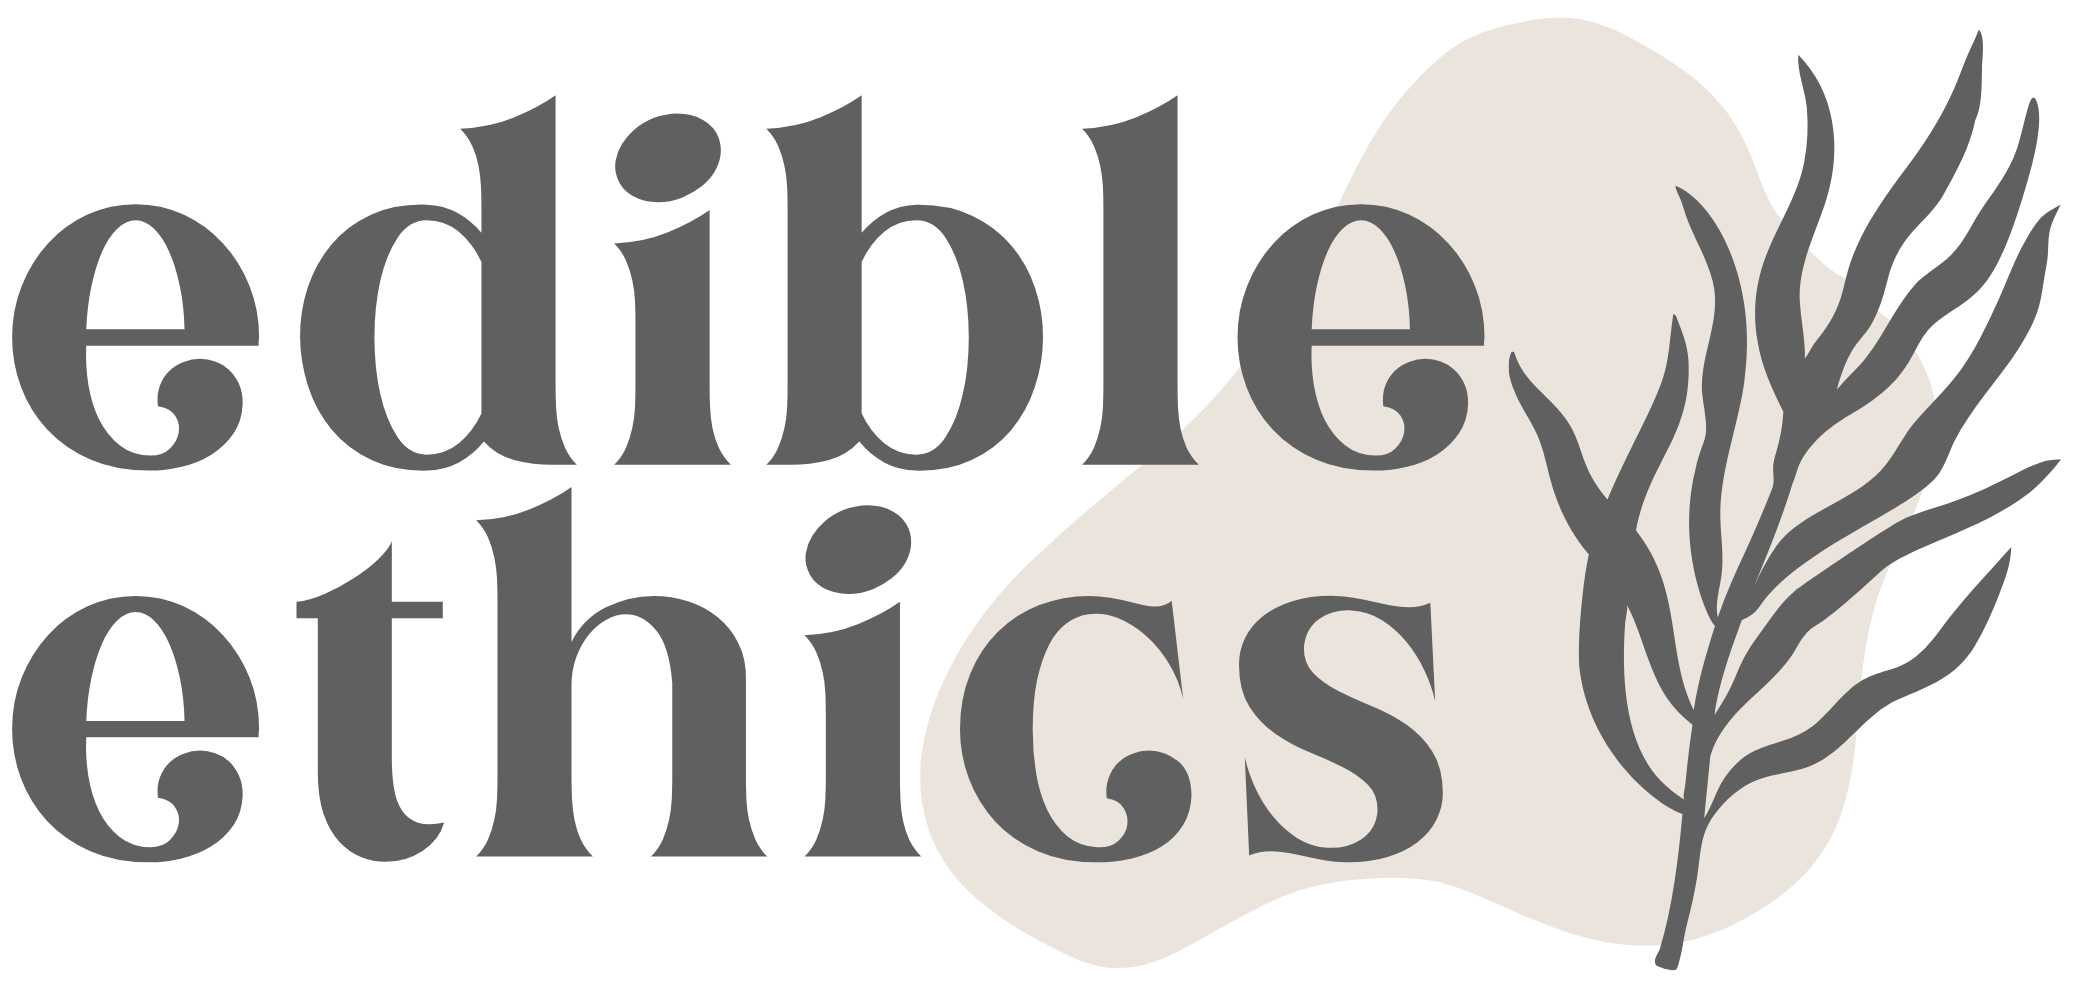 edible ethics vegan food and recipe blog logo design